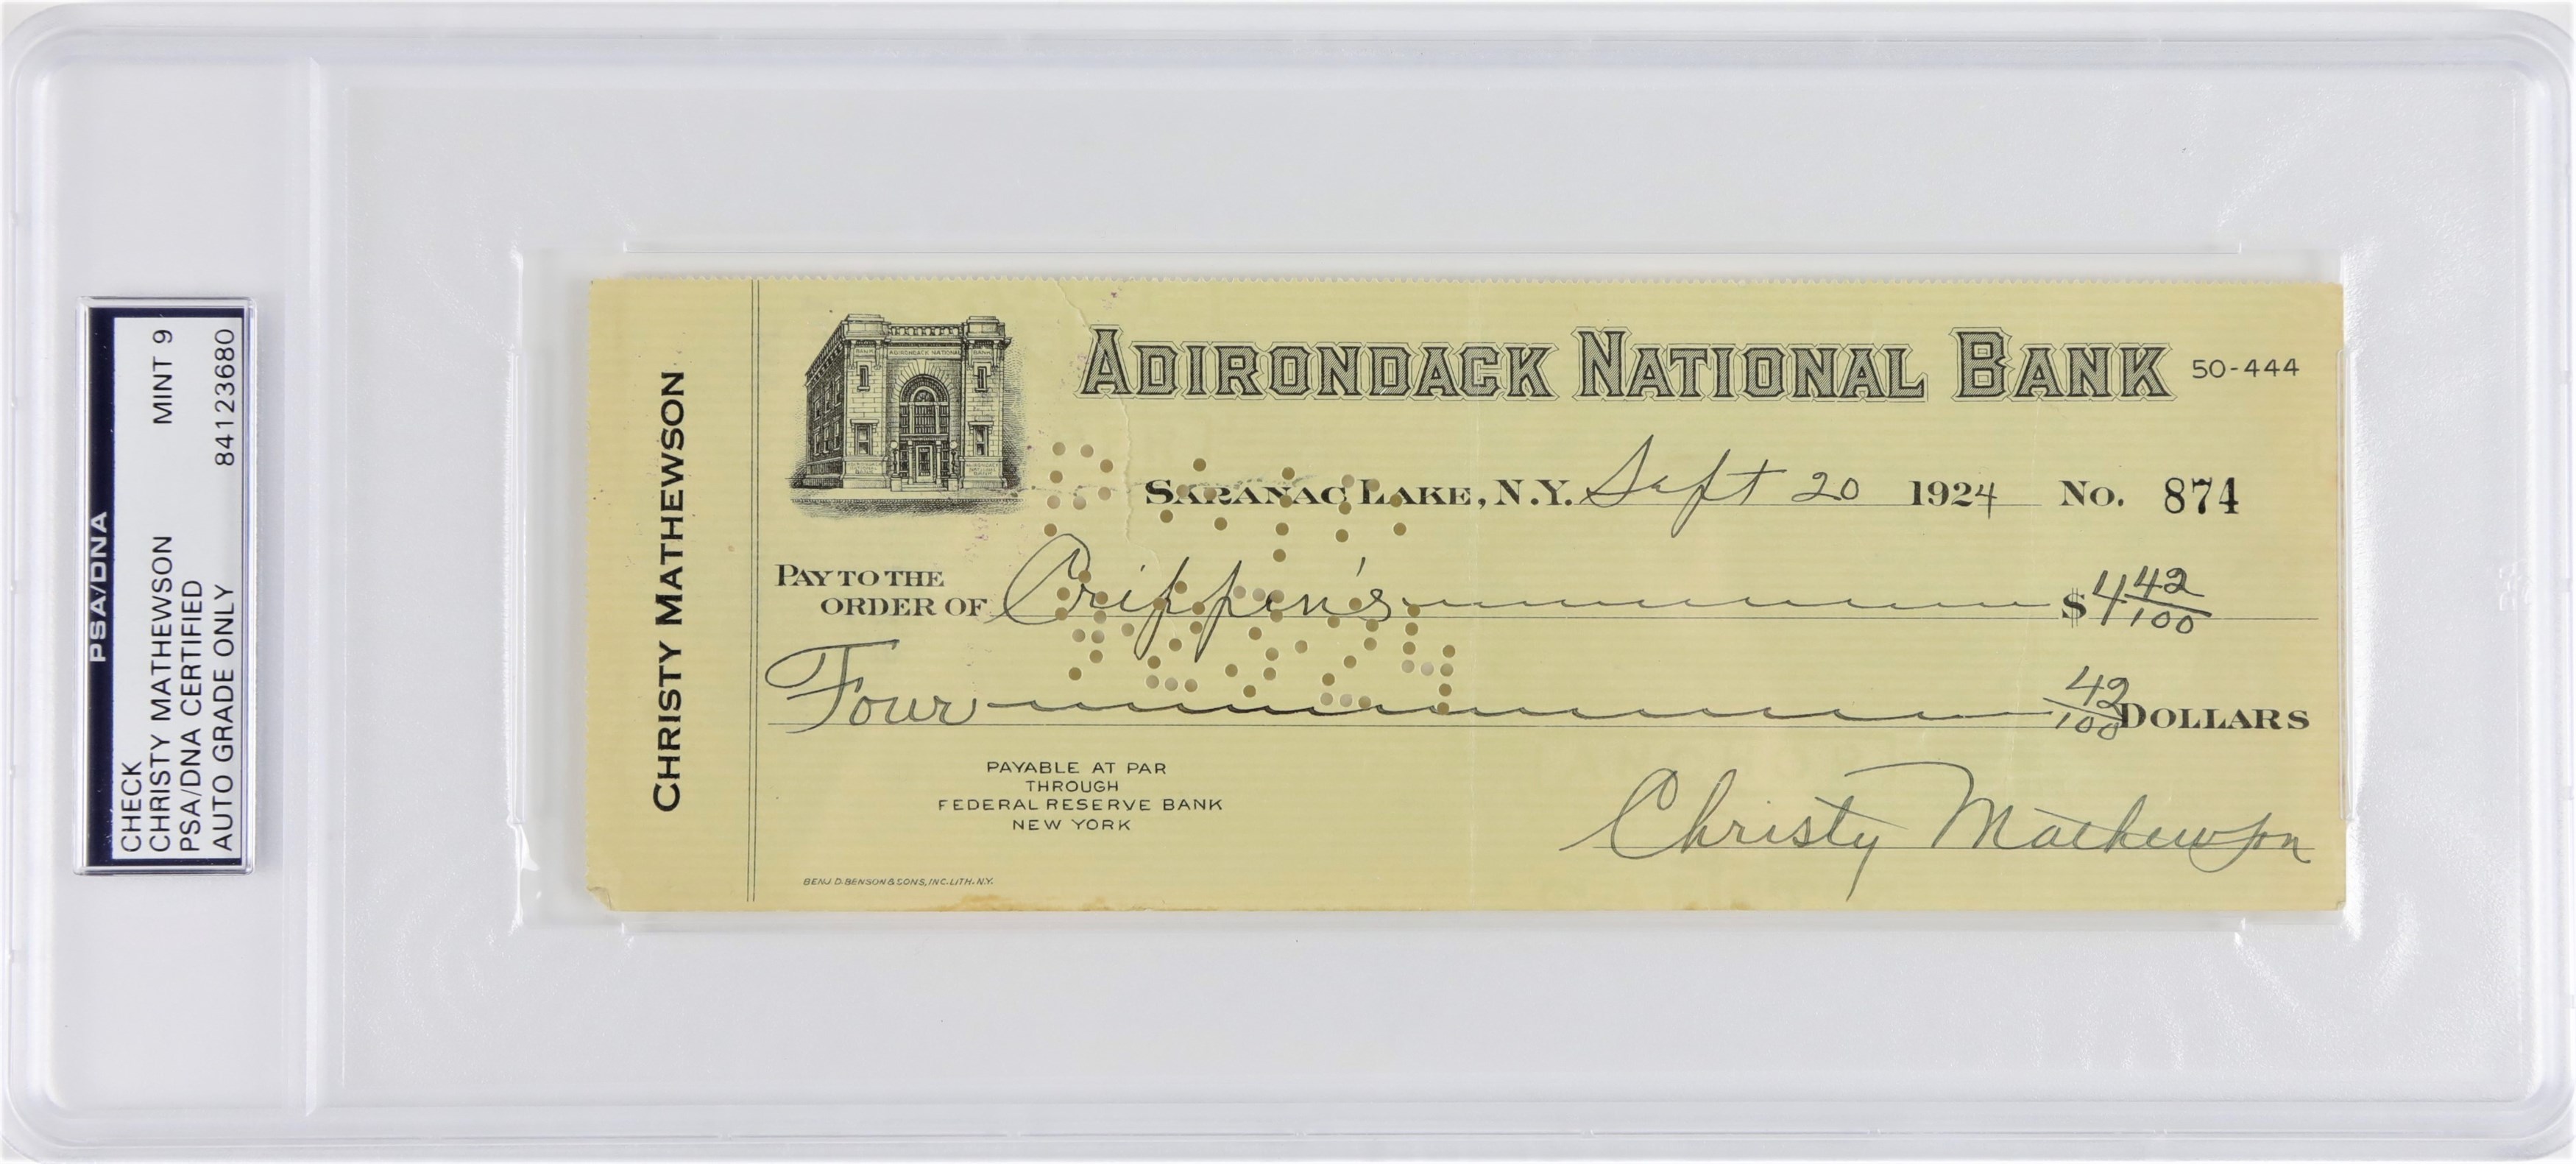 Baseball Autographs - 1924 Christy Mathewson "Last" Signed Check with Stern Letter from Mrs. Mathewson (PSA MINT 9)